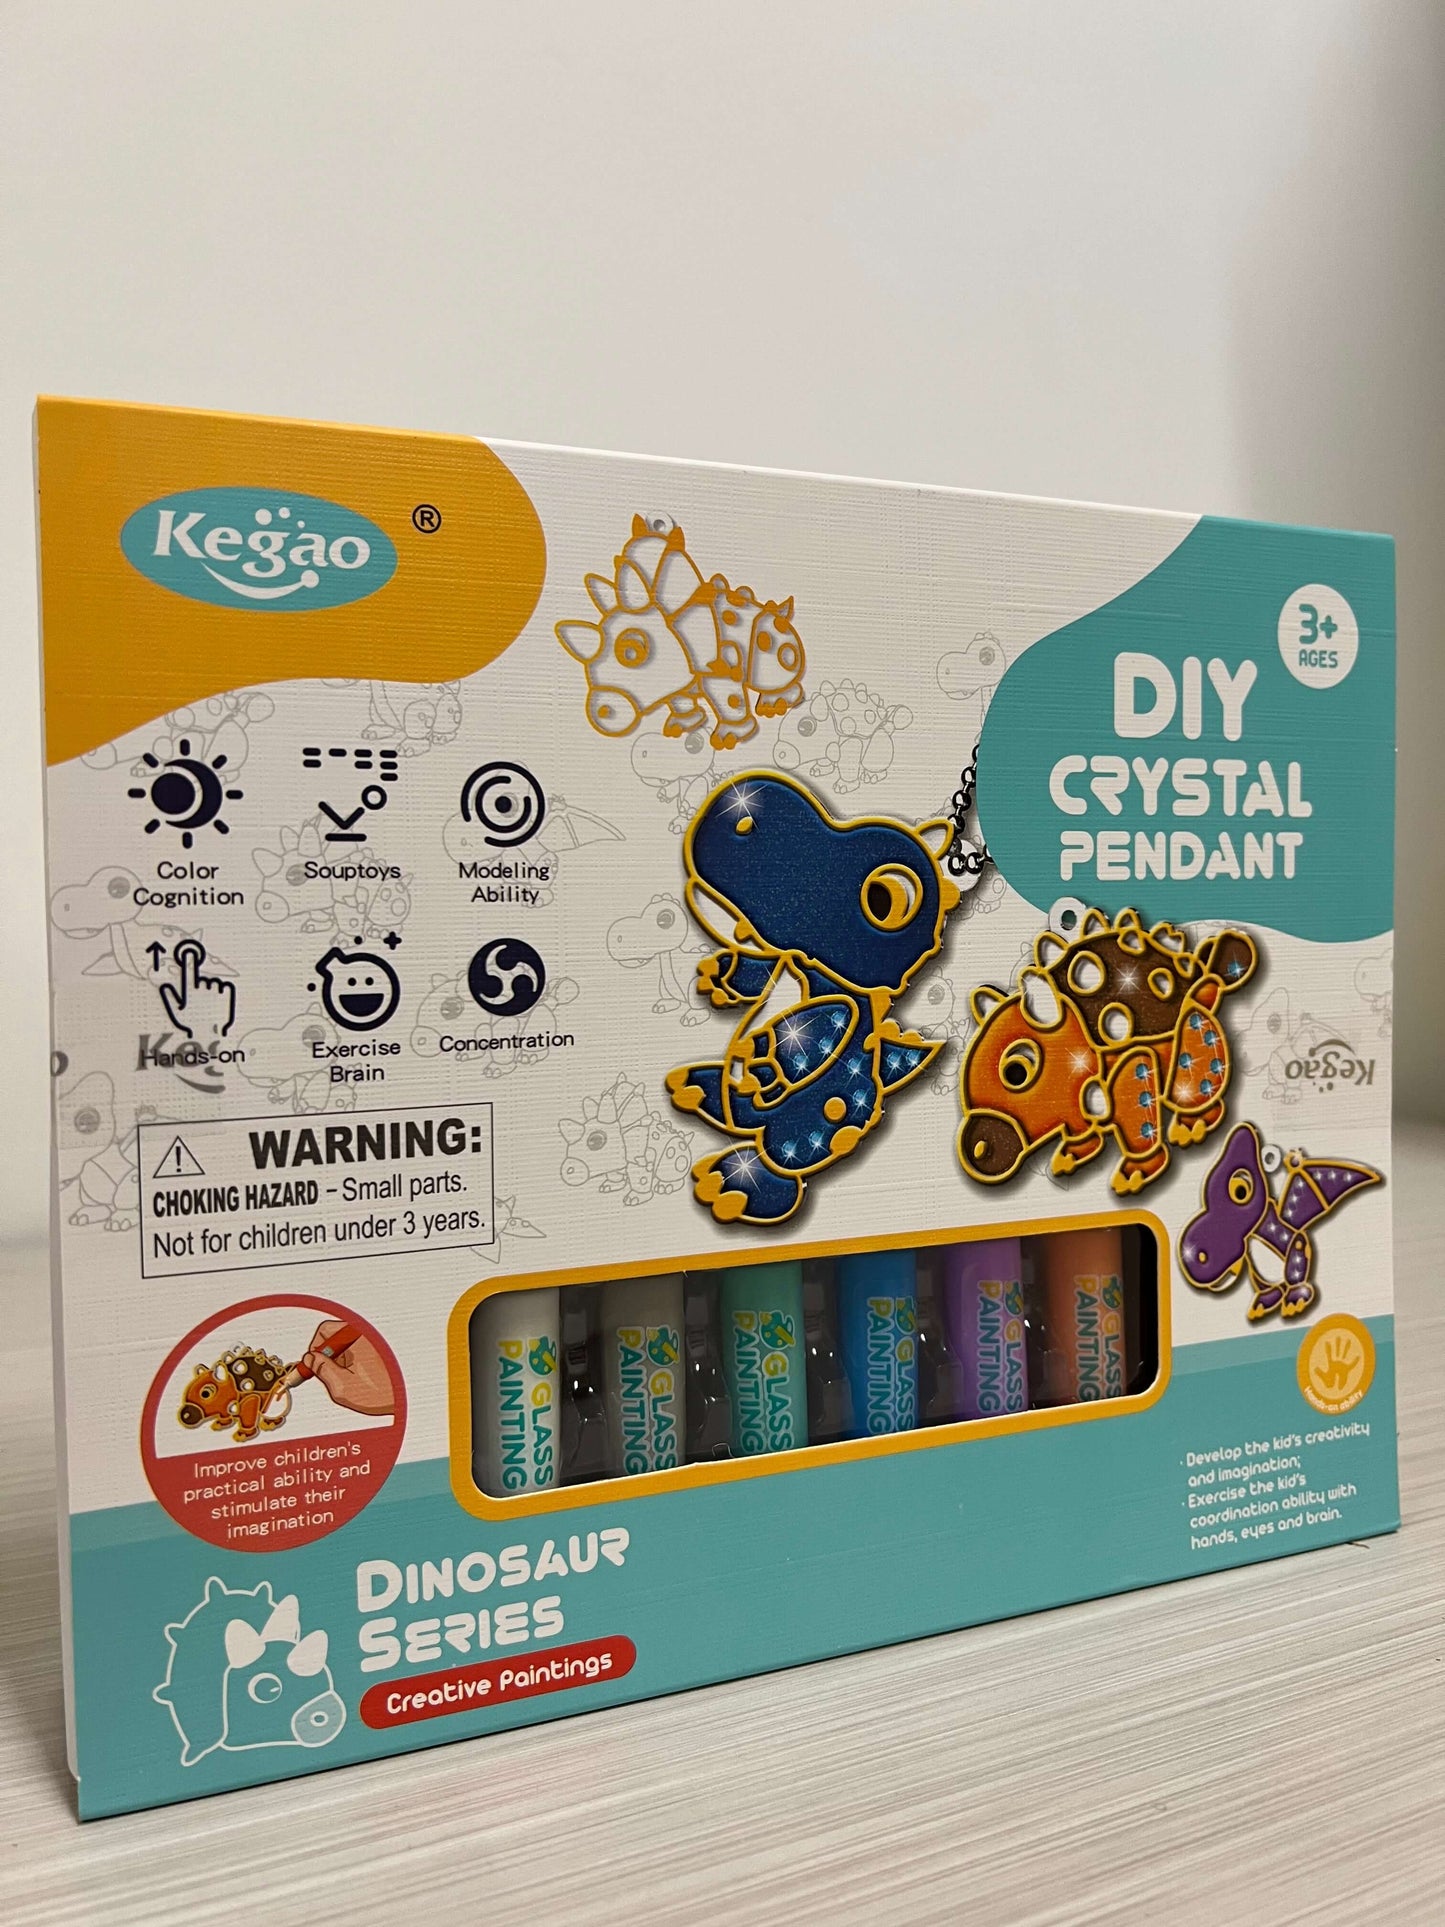 DIY Crystal Pendant - Dinosaur Series